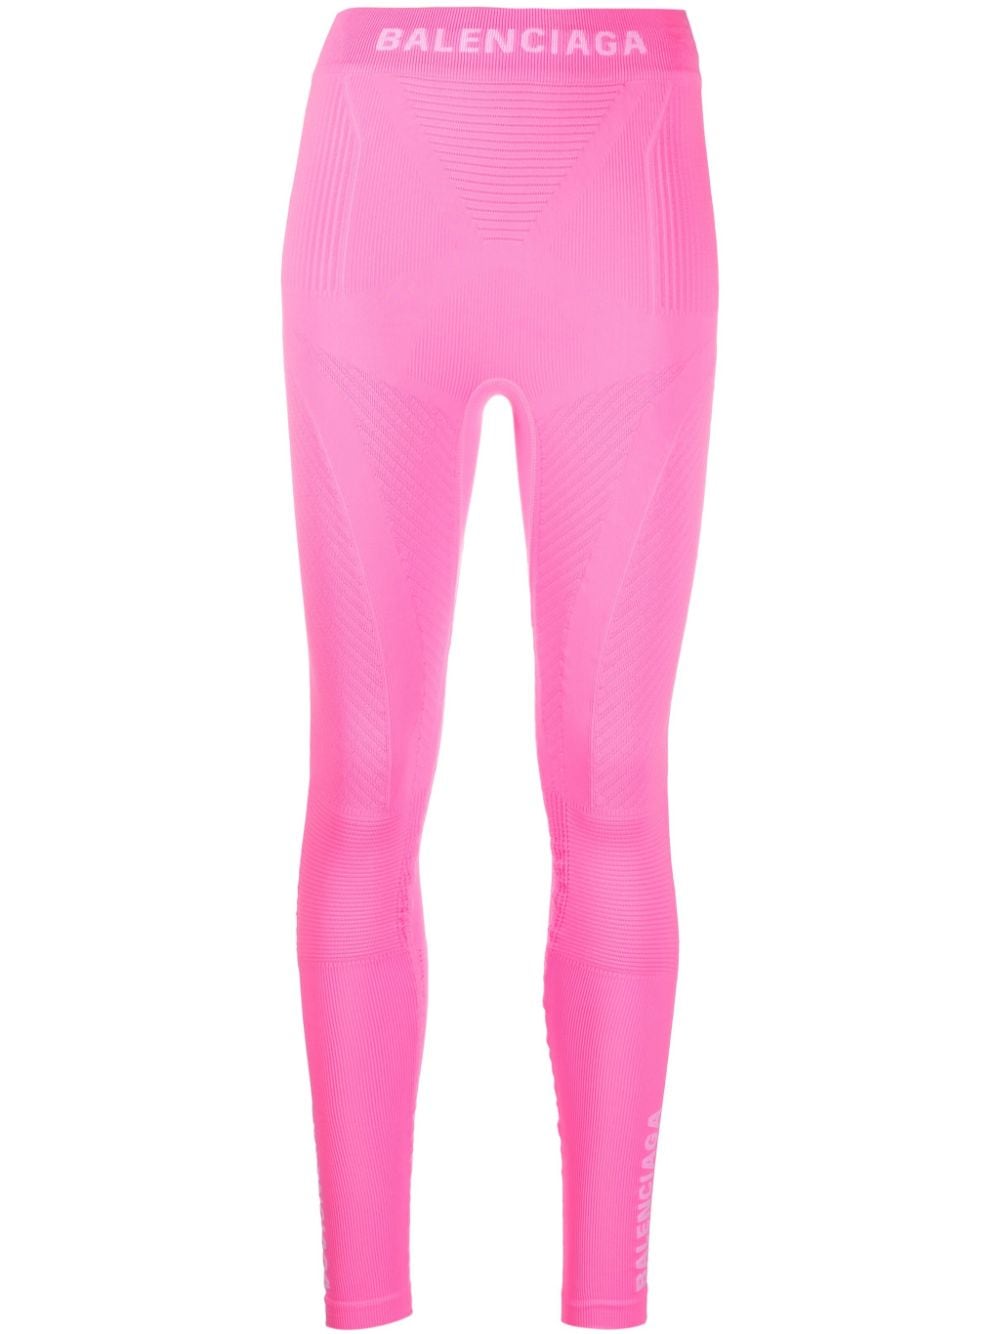 High-rise jersey leggings in pink - Balenciaga